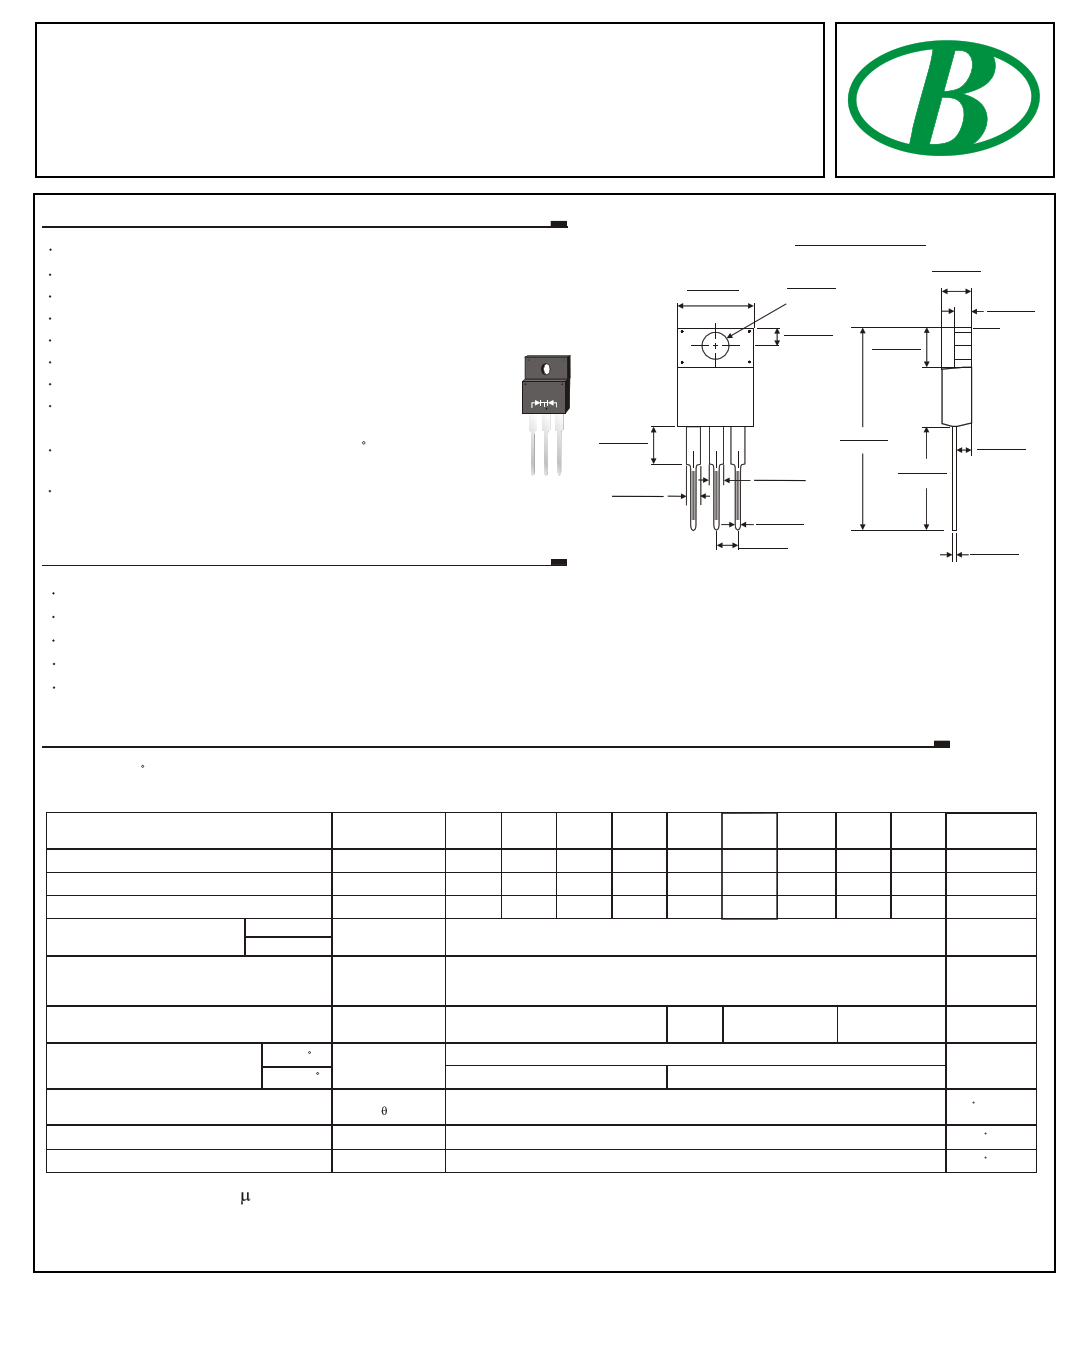 SRF3045CT datasheet, circuit